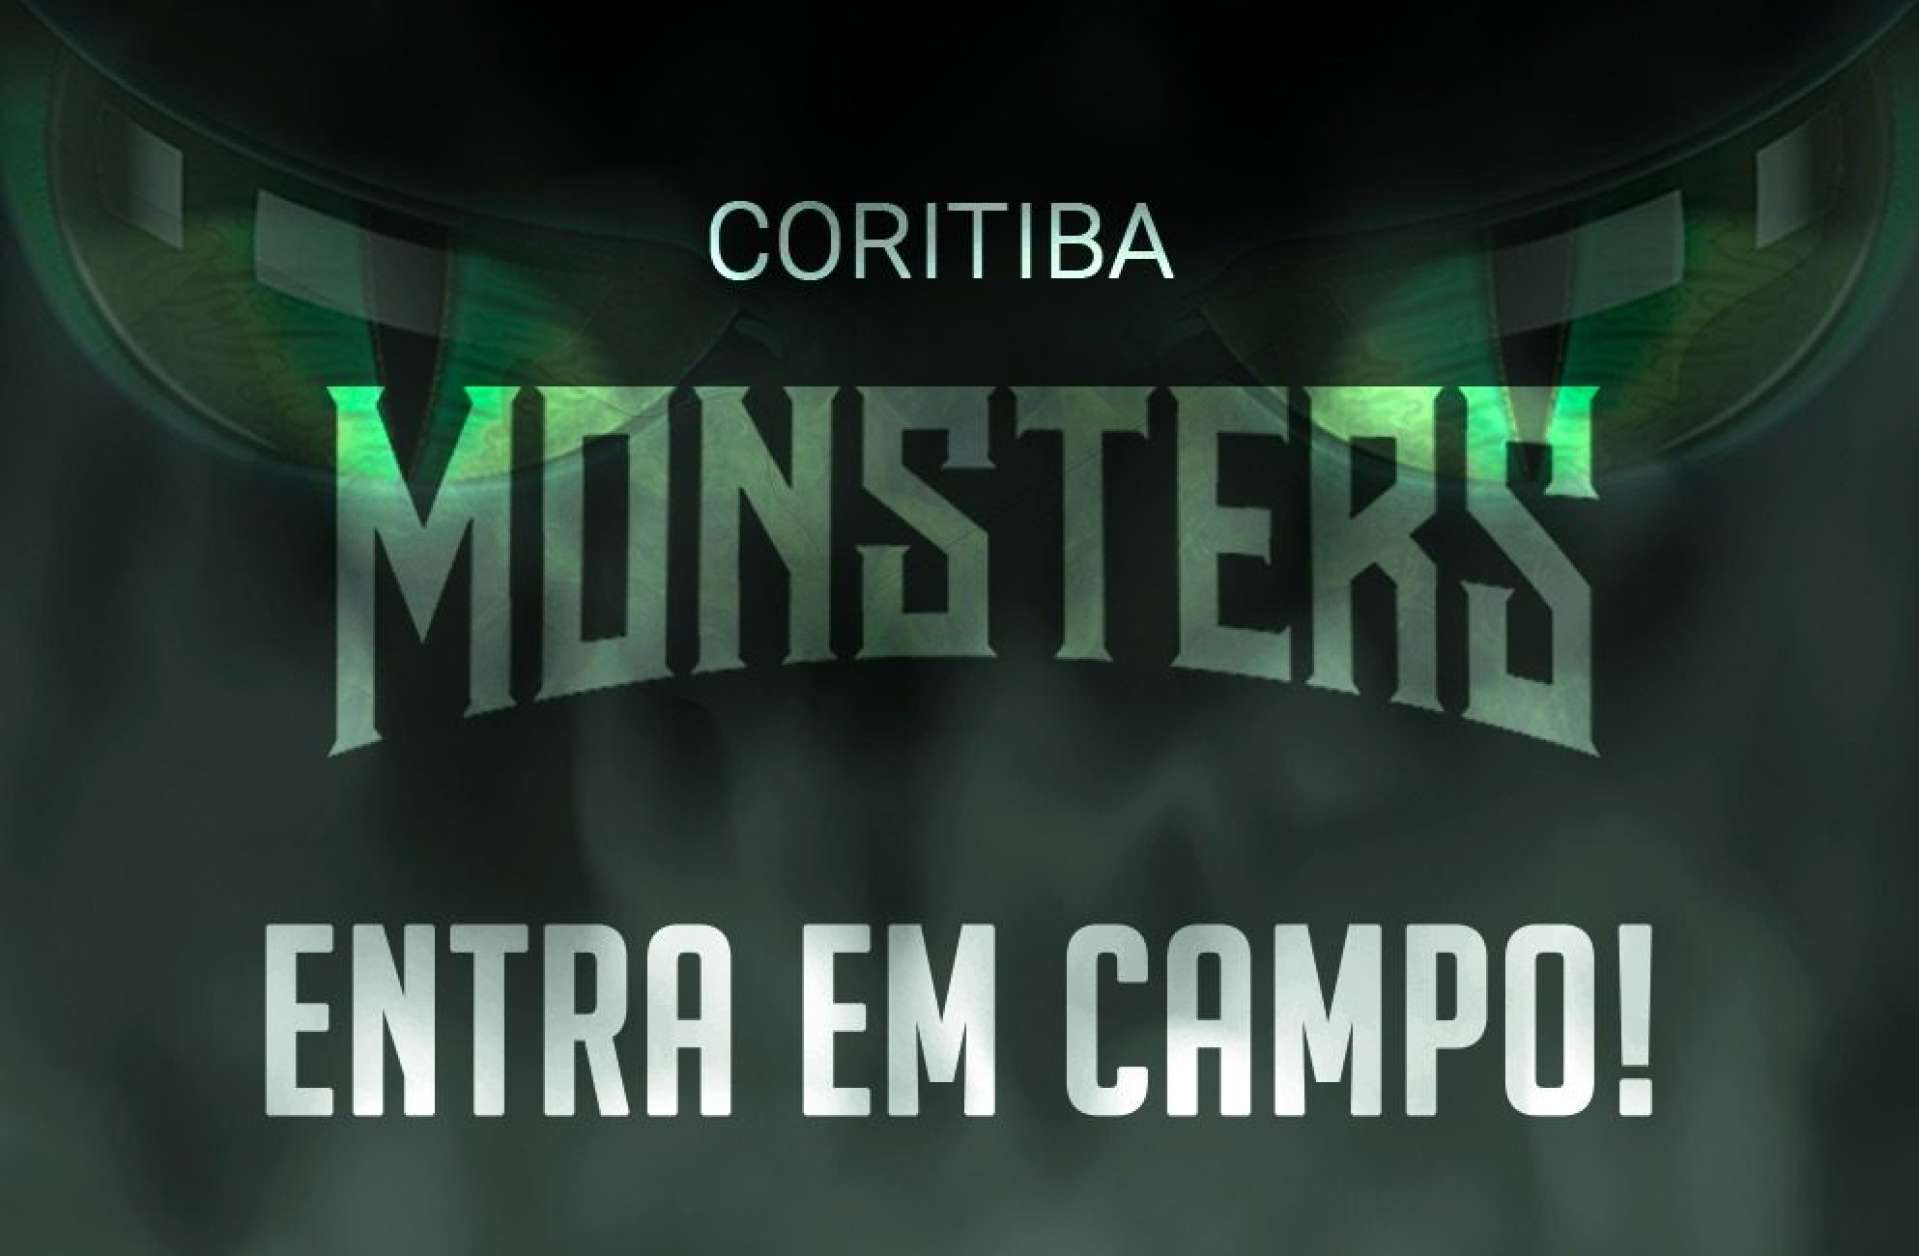 Coritiba Monsters estreia nesta sexta